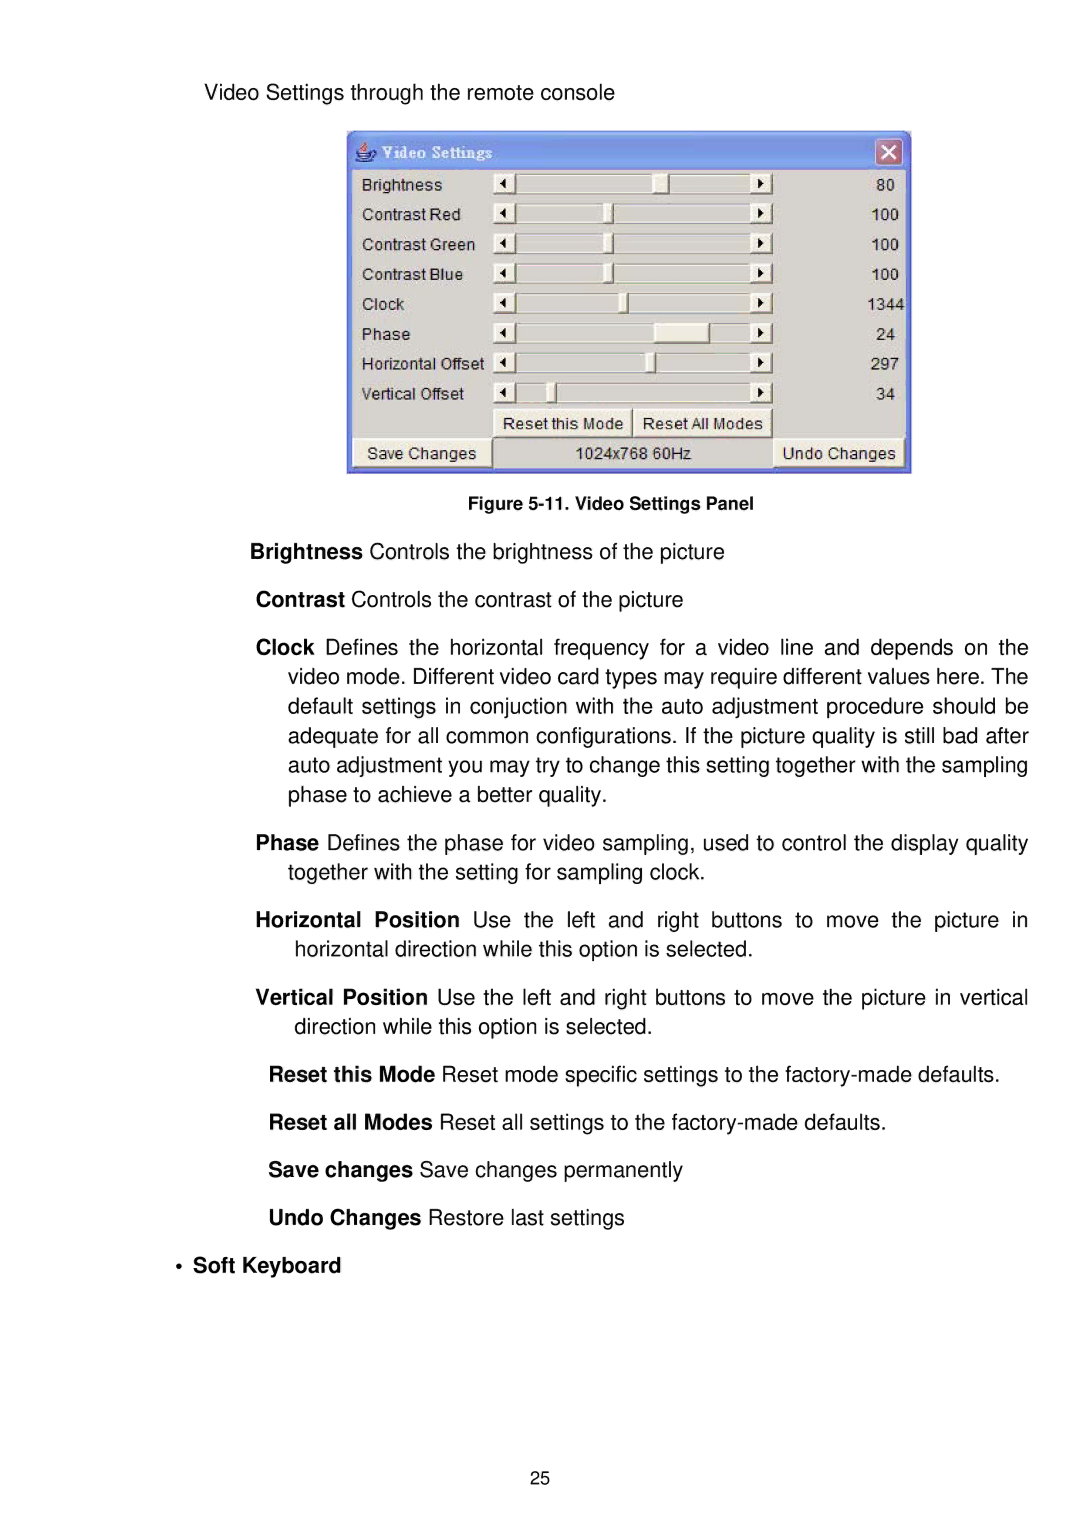 LevelOne KVM-9000 user manual Soft Keyboard, Video Settings Panel 